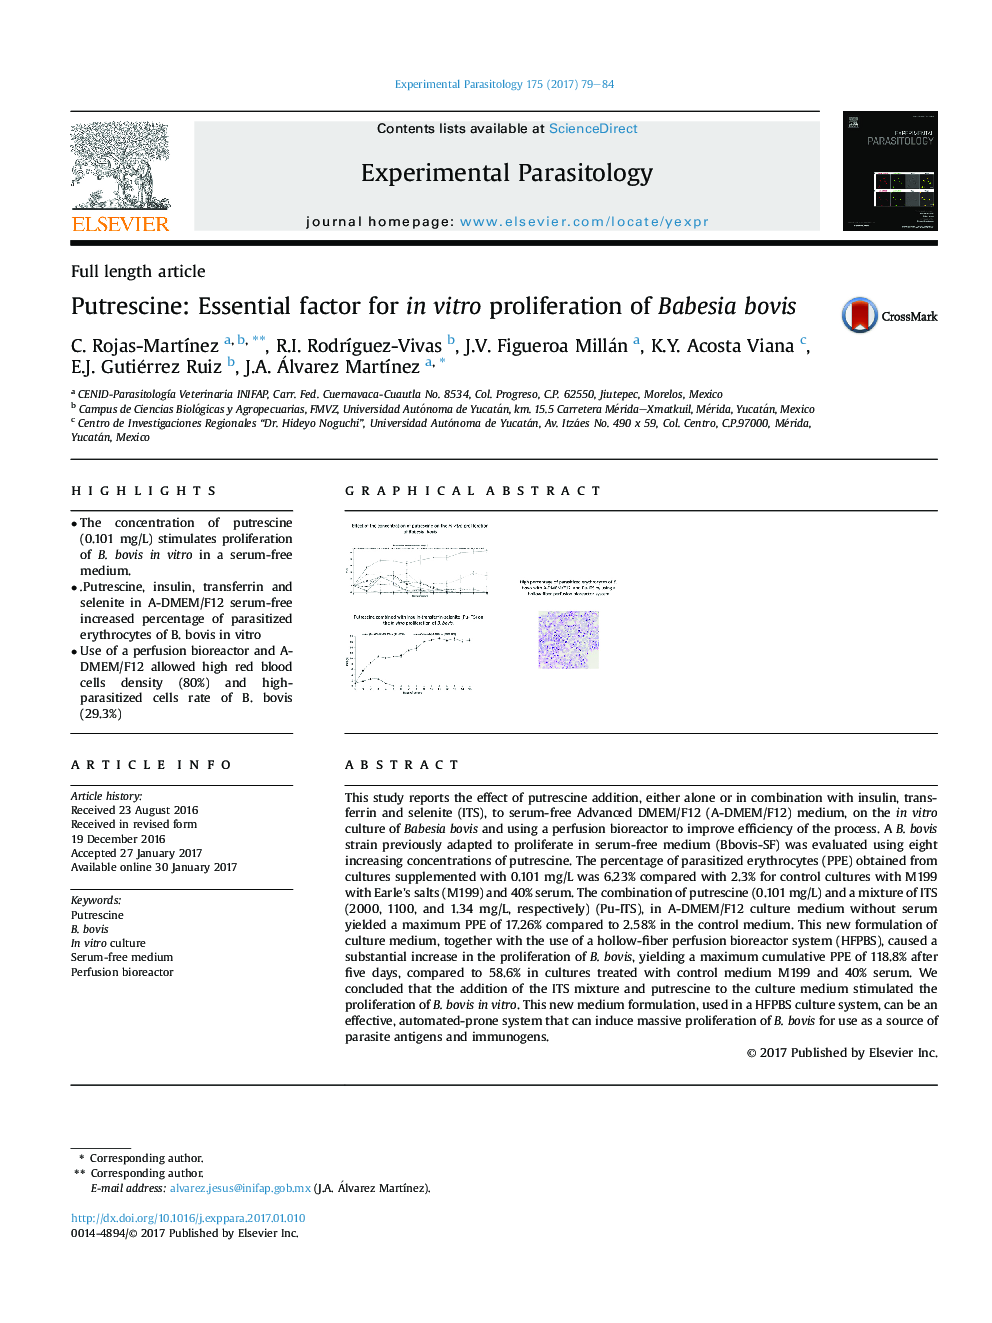 Full length articlePutrescine: Essential factor for inÂ vitro proliferation of Babesia bovis